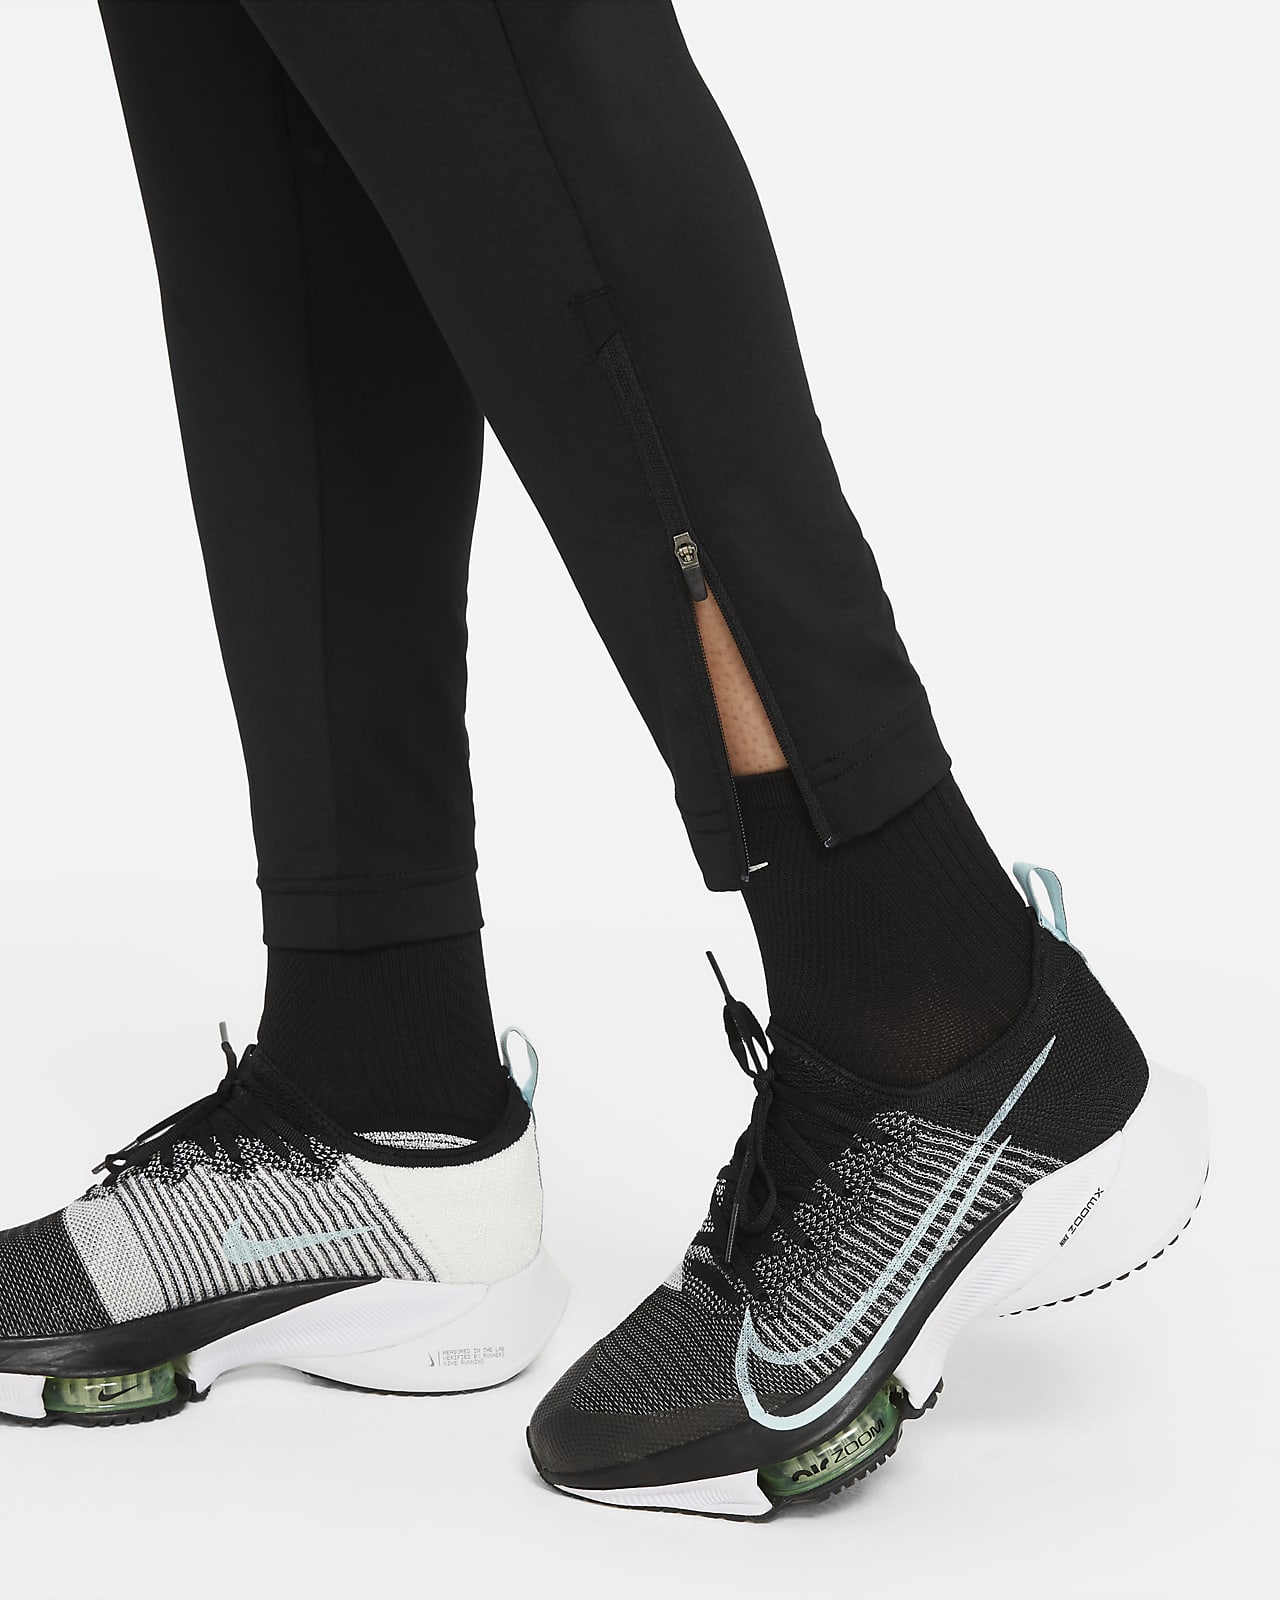 Nike Dri-FIT Essential Women's Running Trousers. Nike LU